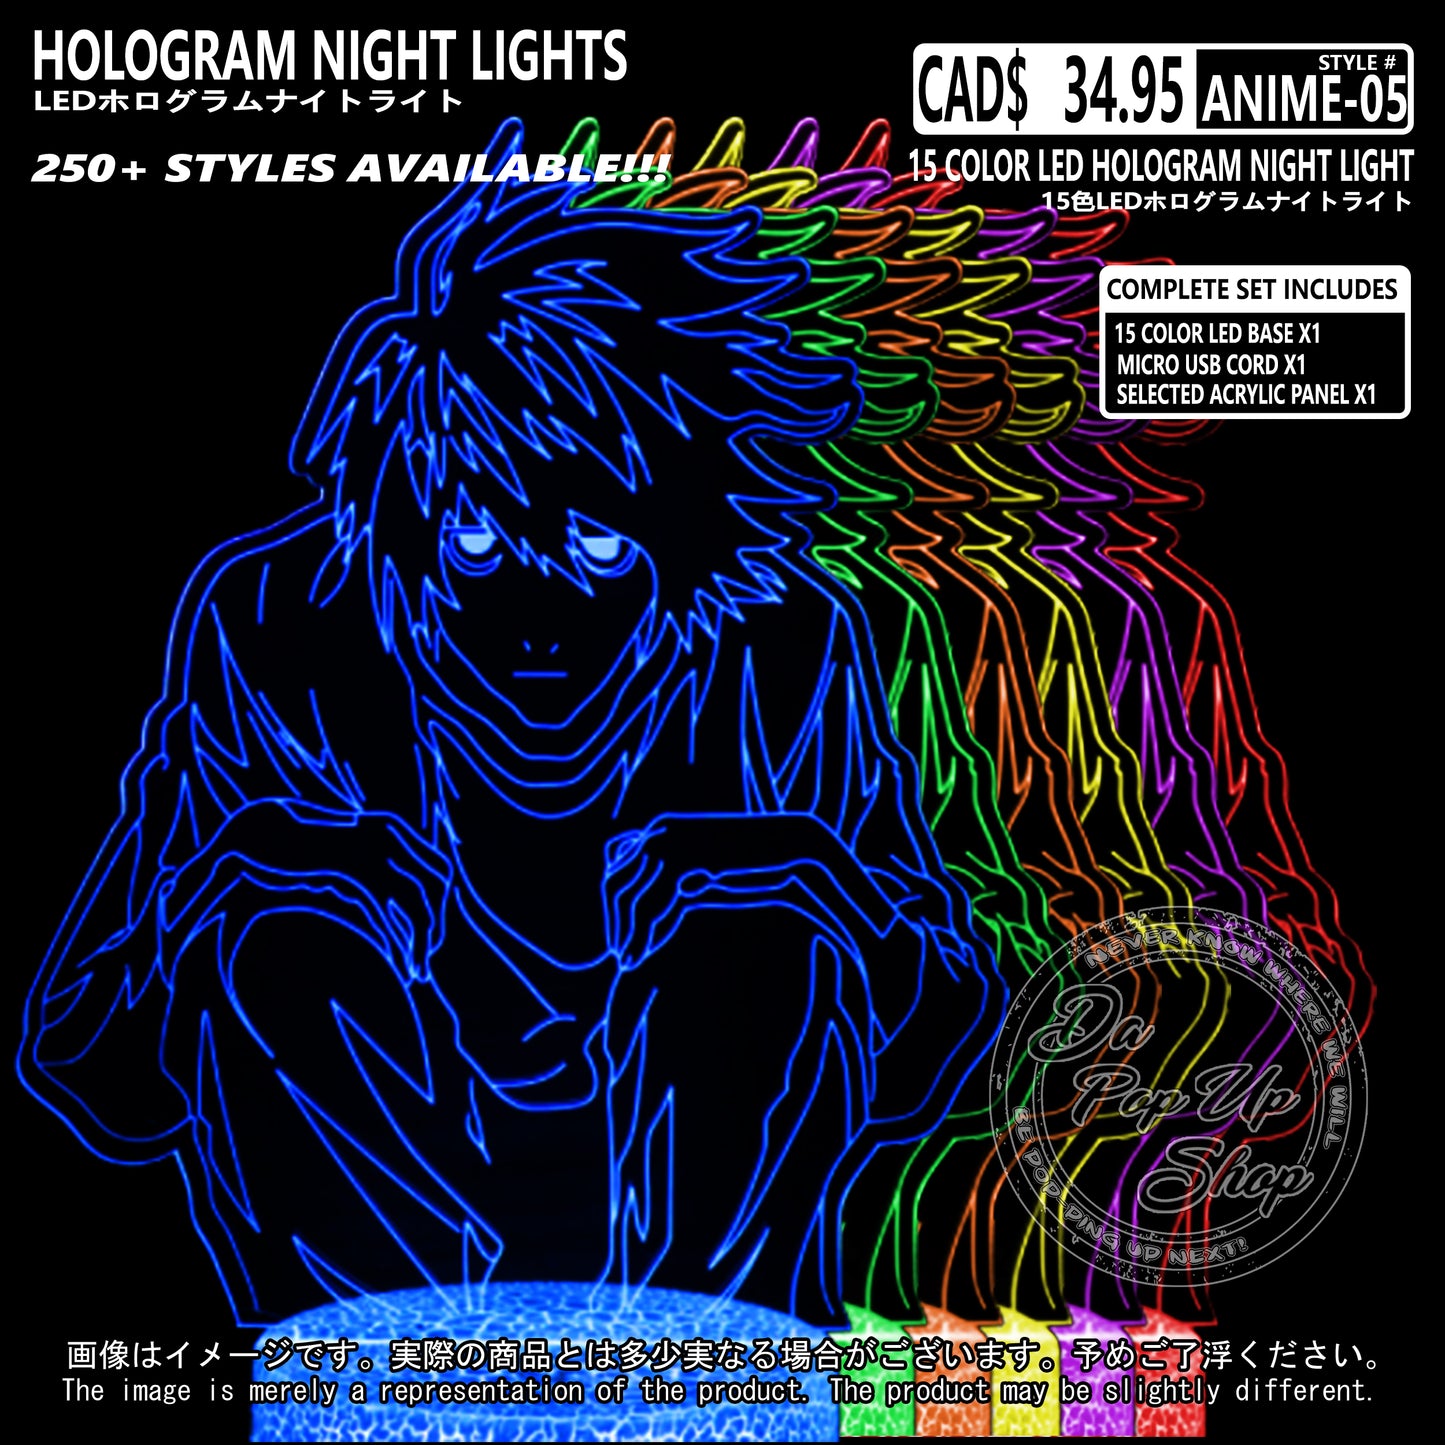 (ANIME-05) Death Note Hologram LED Night Light